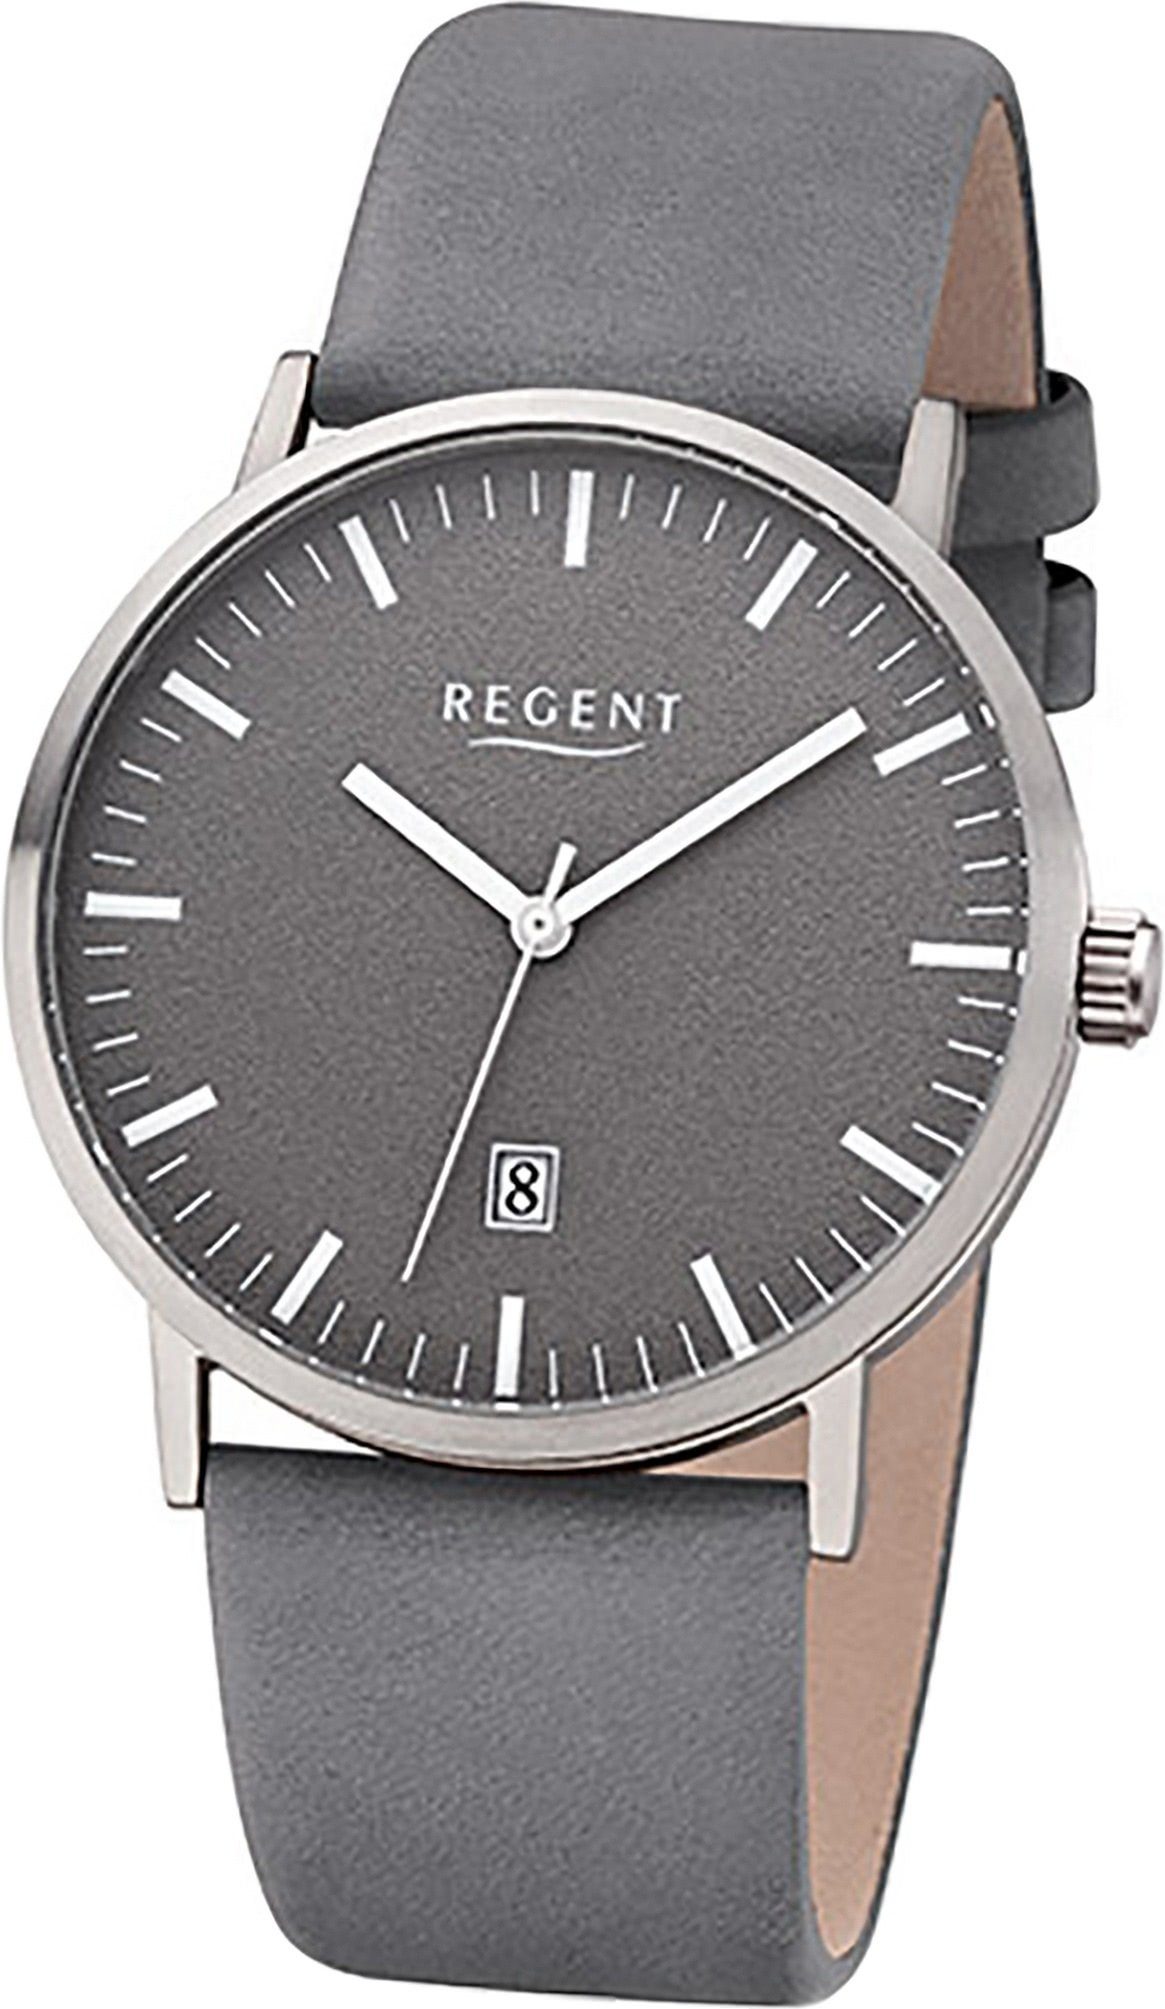 Regent Quarzuhr Regent Leder Herren Uhr F-1234 Analoge, Herrenuhr Lederarmband grau, rundes Gehäuse, mittel (ca. 39mm) | Quarzuhren